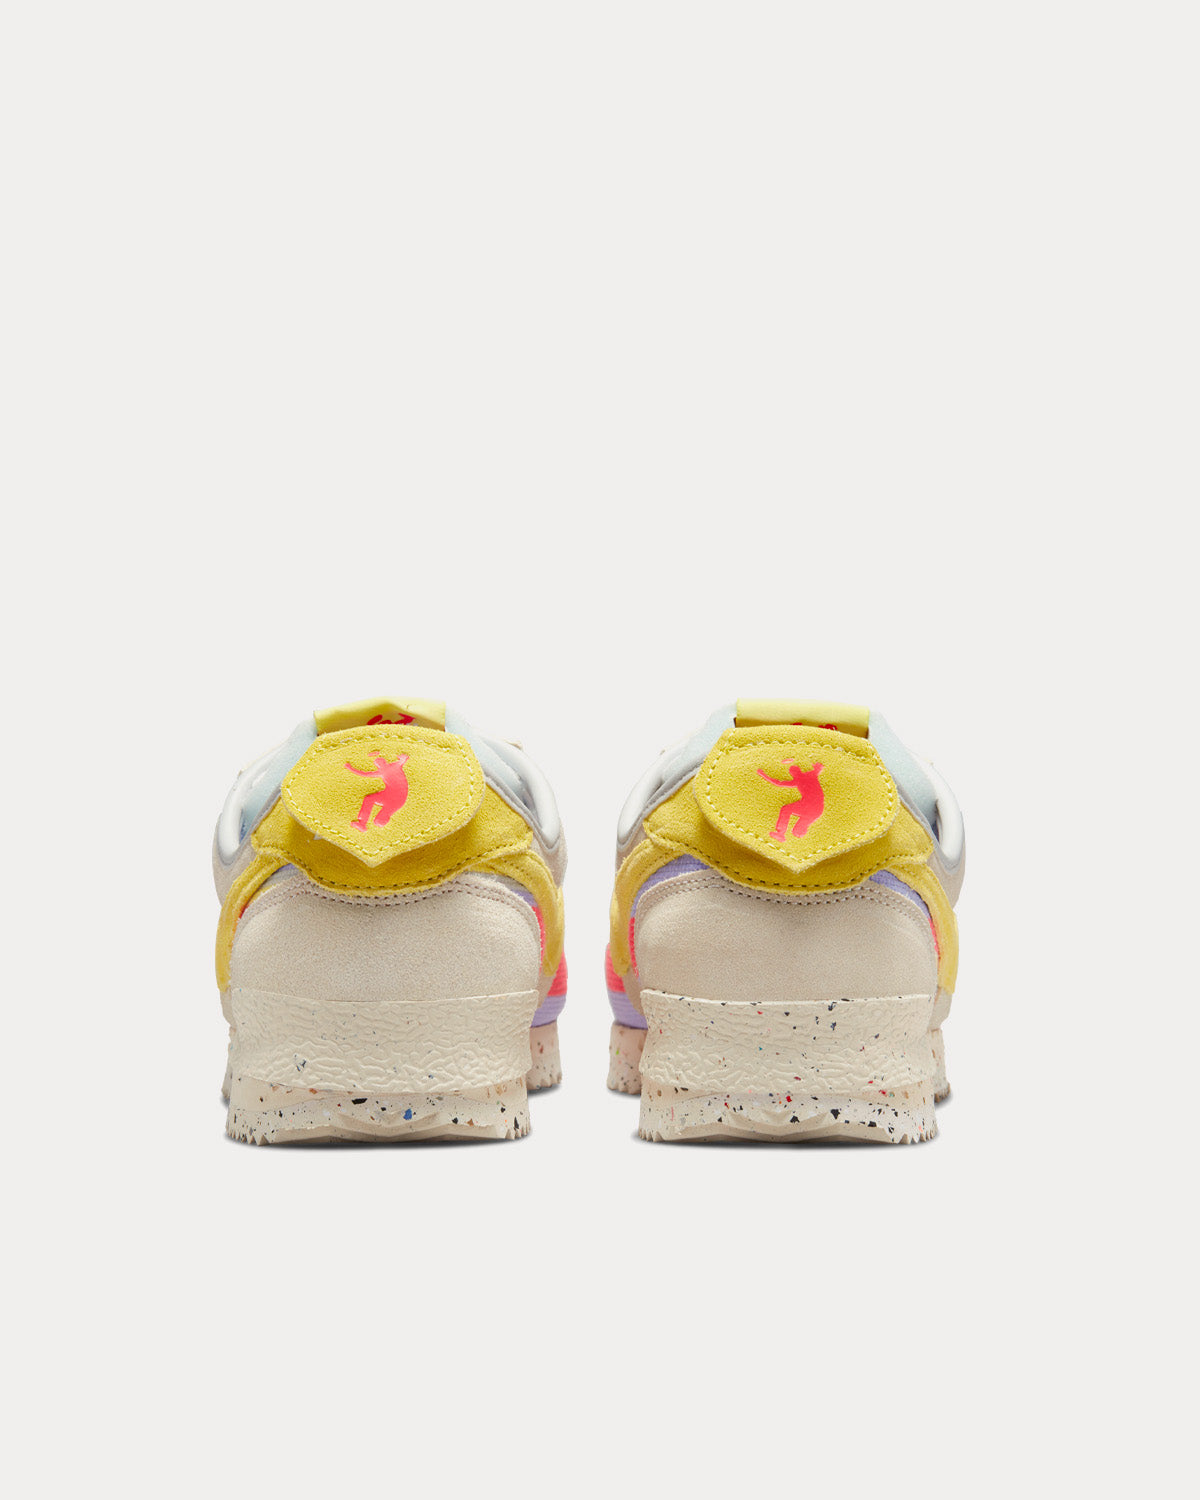 Nike x Union - Cortez SP Lemon Frost Low Top Sneakers